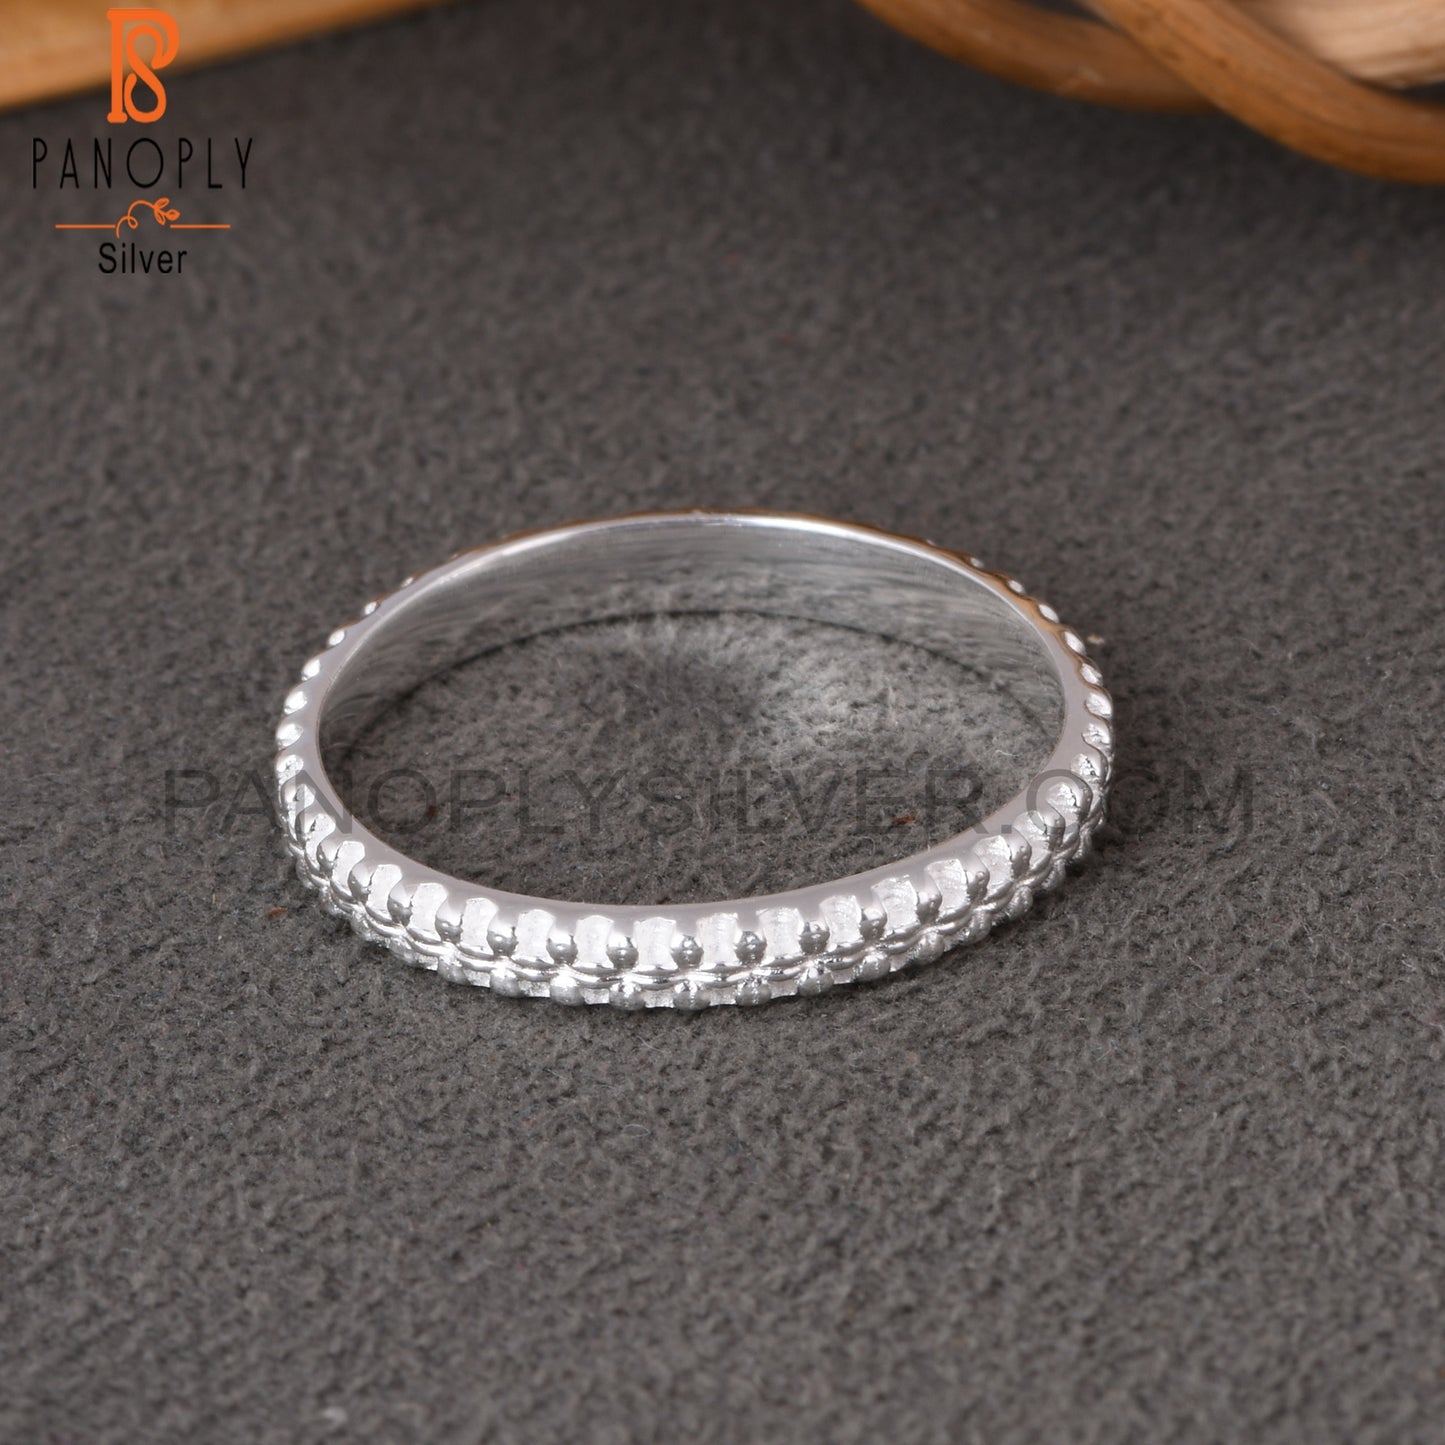 Handmade 925 Sterling Silver Pattern Ring Band